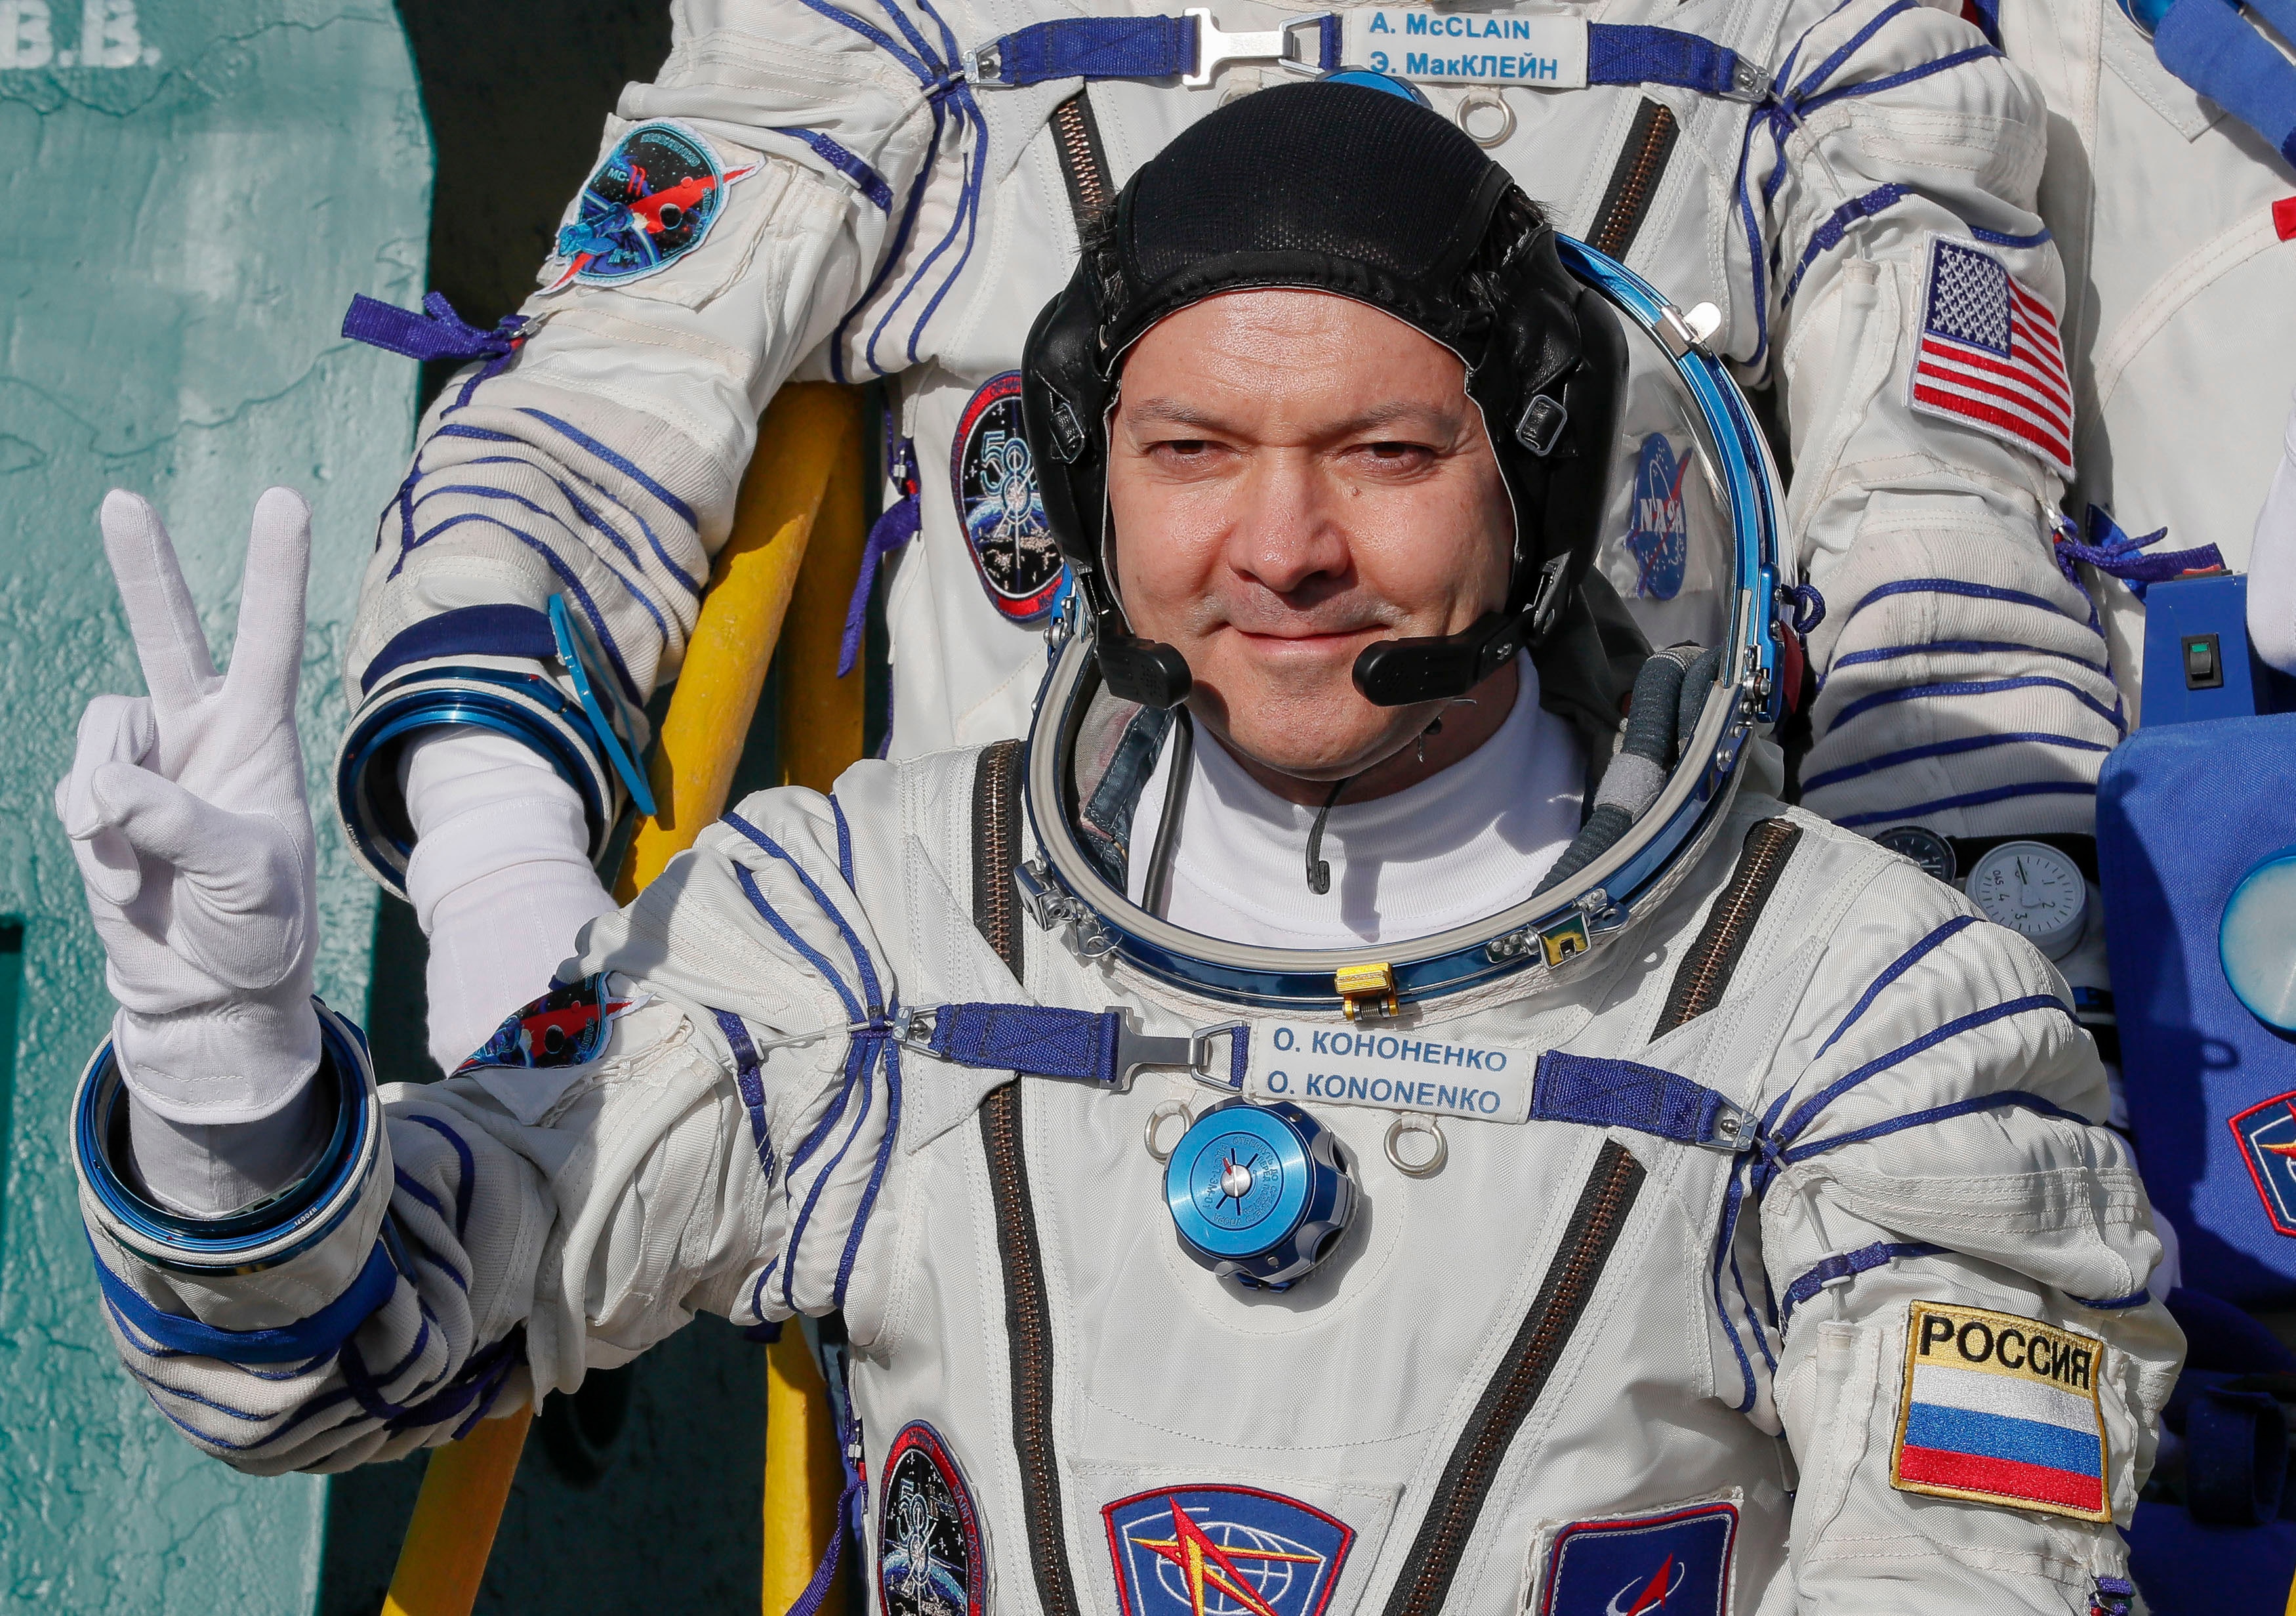 Russian cosmonaut Oleg Kononenko as he boards the Soyuz ship, bound for the ISS.